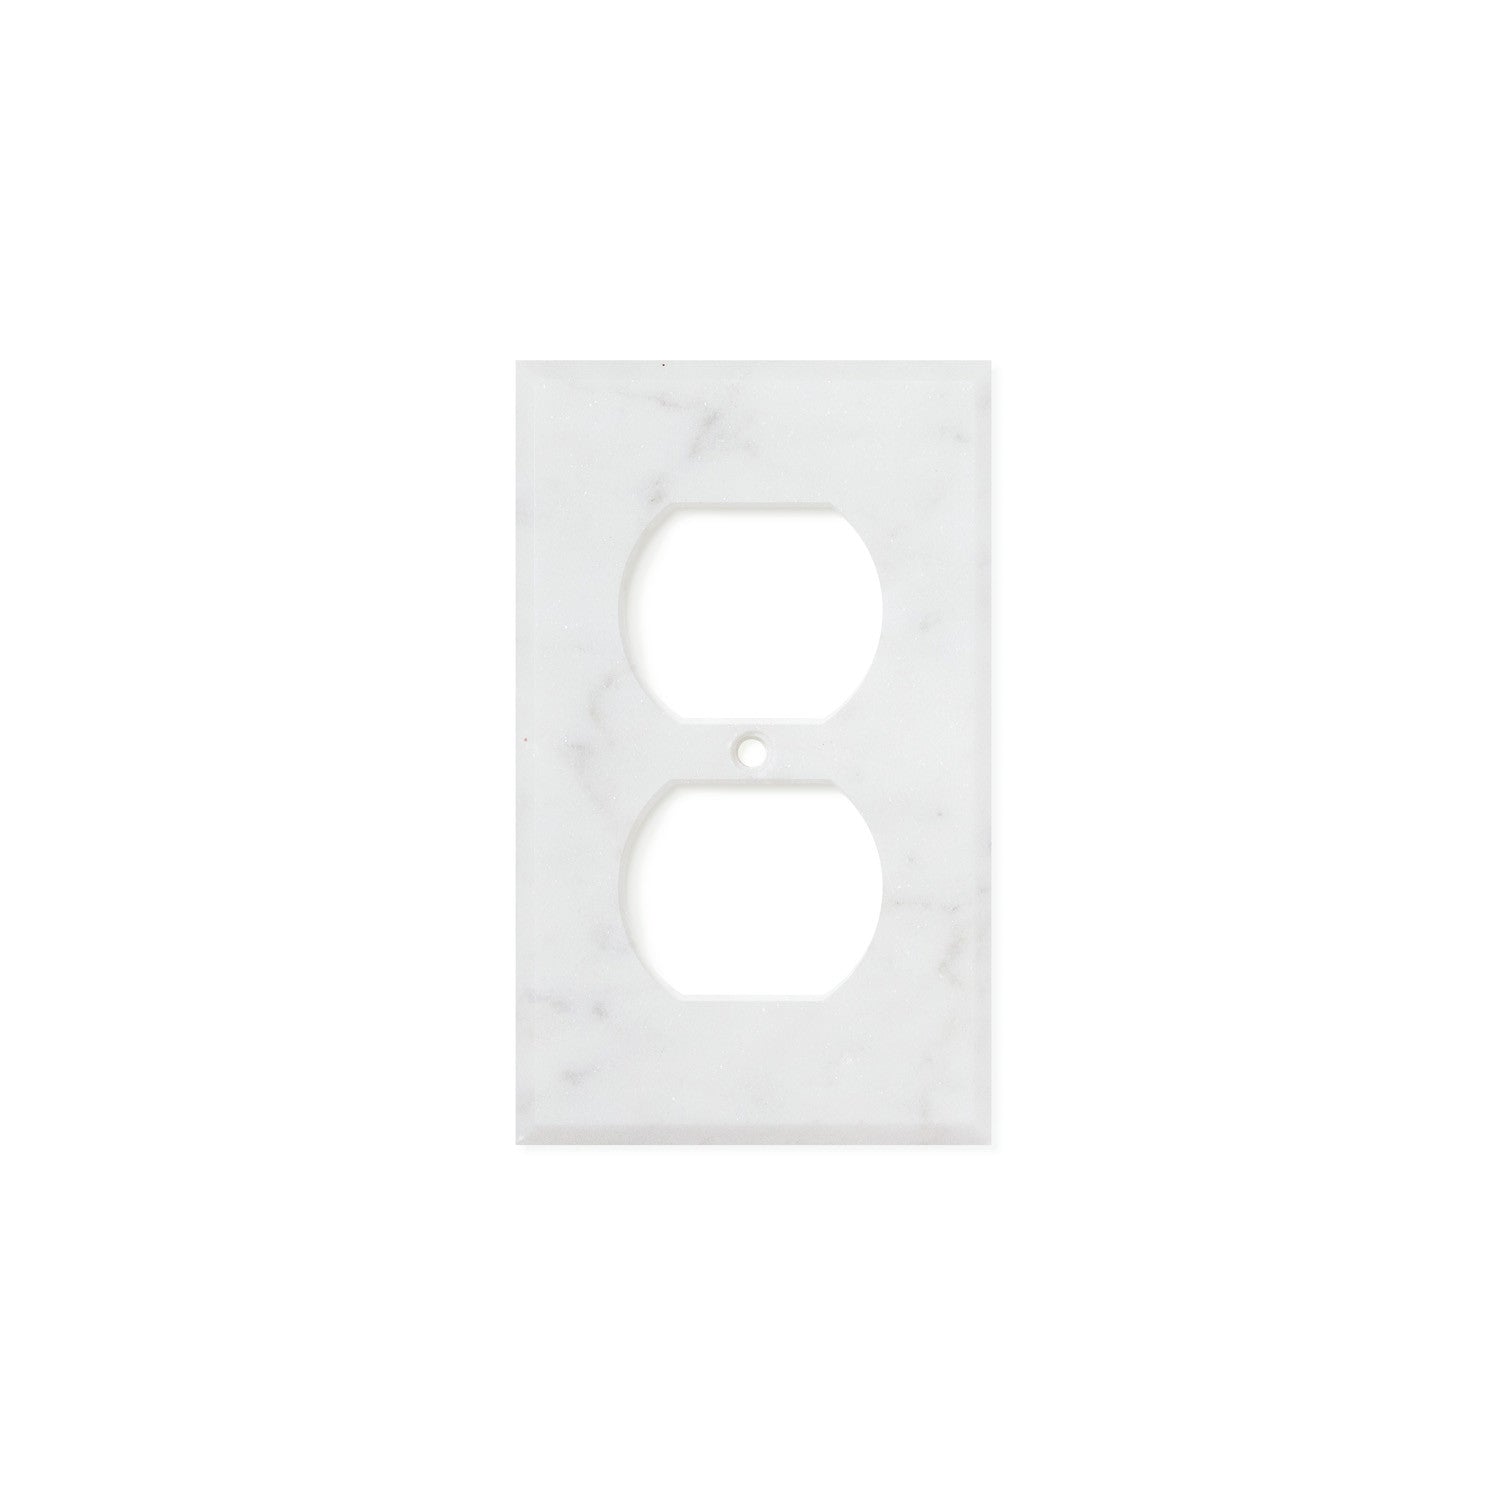 Bianco Carrara (Carrara White) Marble Switch Plate Cover, Honed (SINGLE DUPLEX) - Tilephile